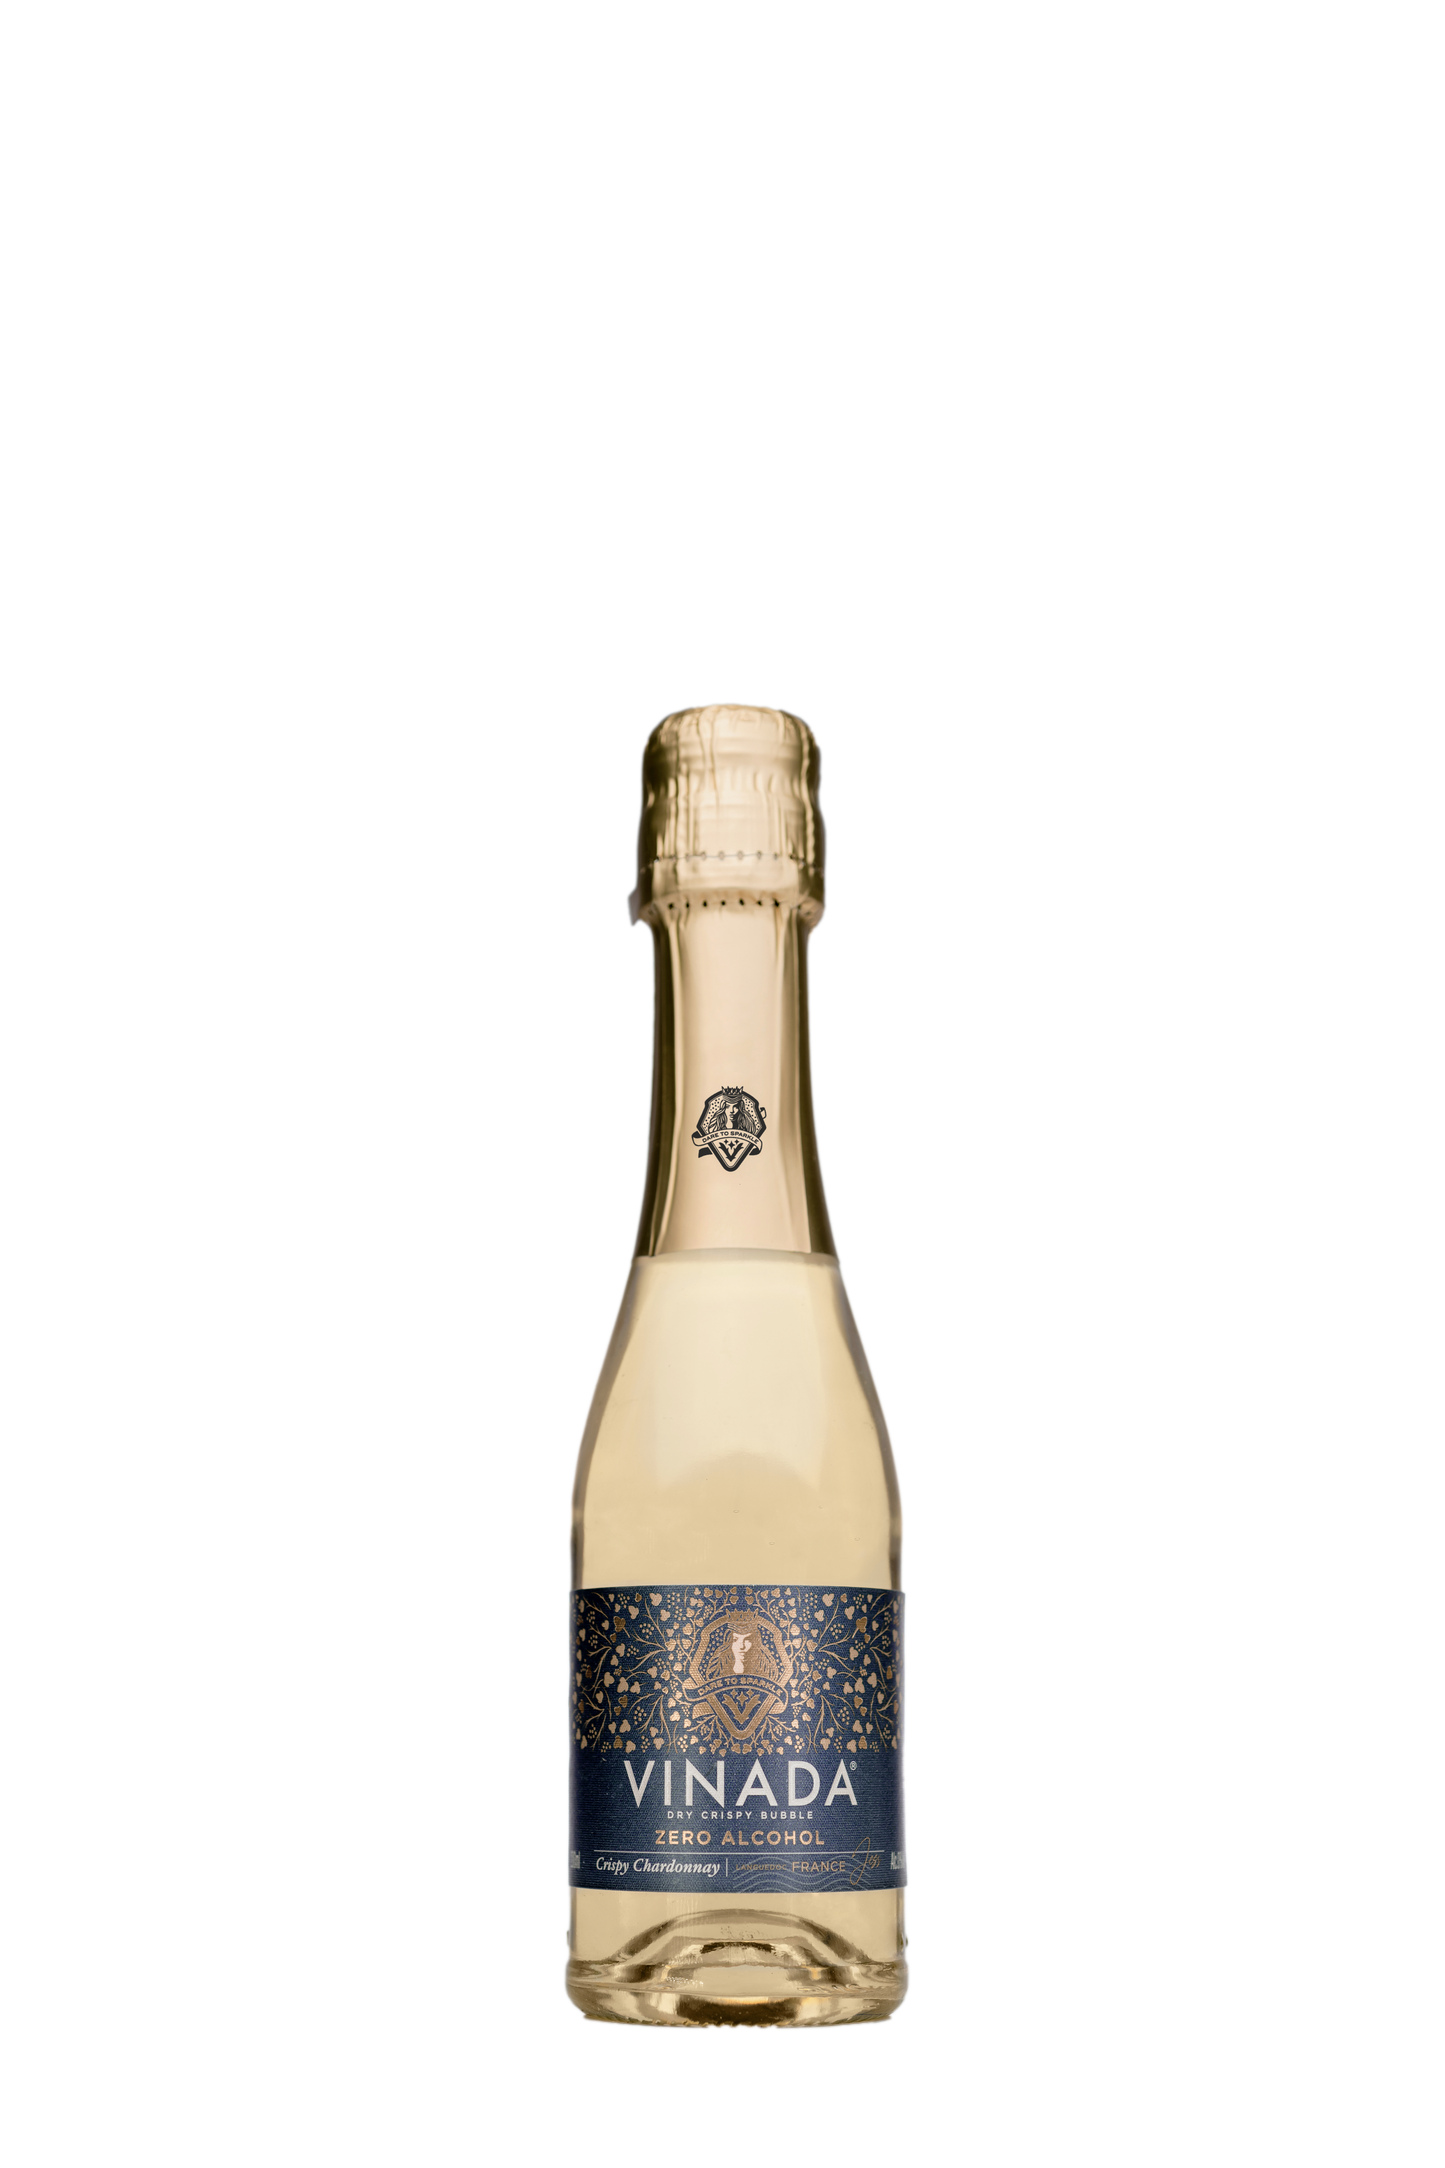 VINADA Crispy Chardonnay 200ml bottle